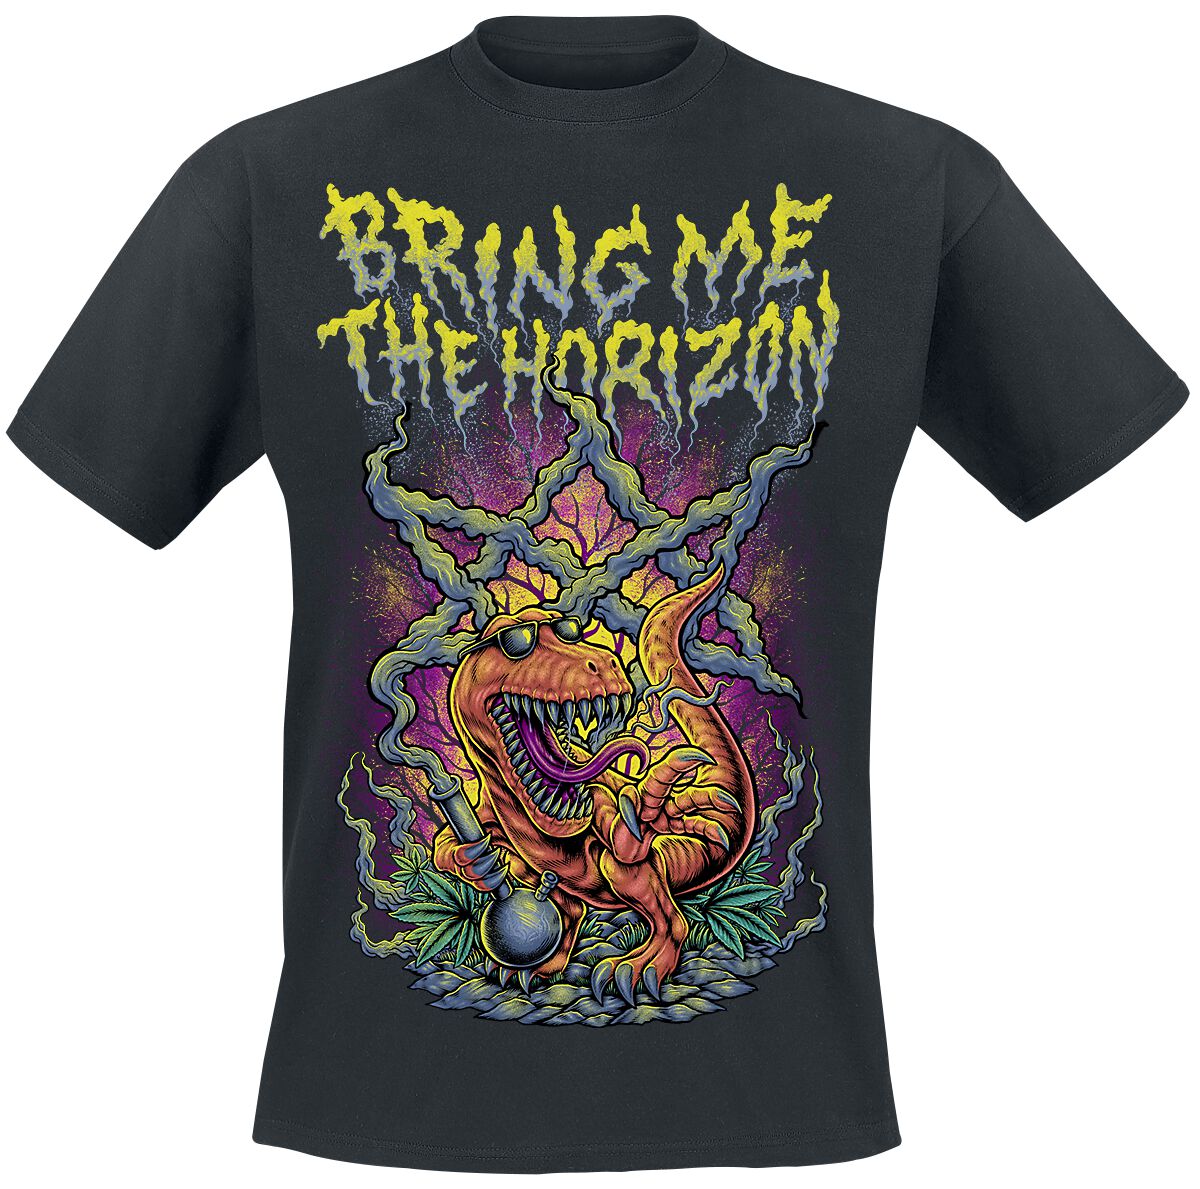 Bring Me The Horizon Smoking Dinosaur T-Shirt schwarz in XXL